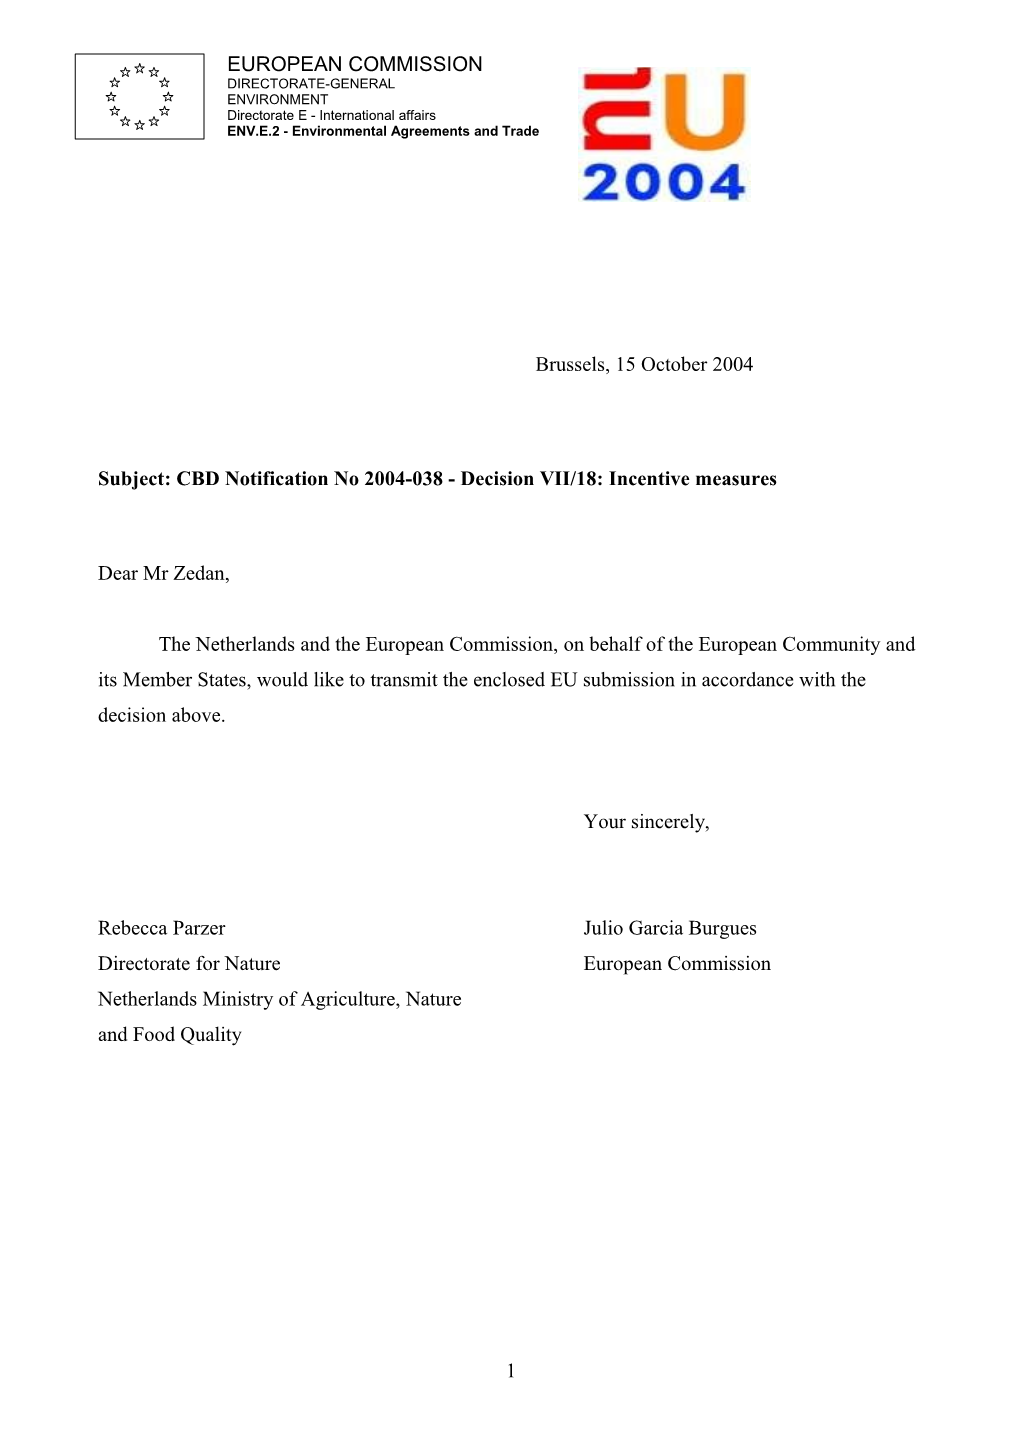 Subject: CBD Notification No 2004-038 -Decision VII/18: Incentive Measures